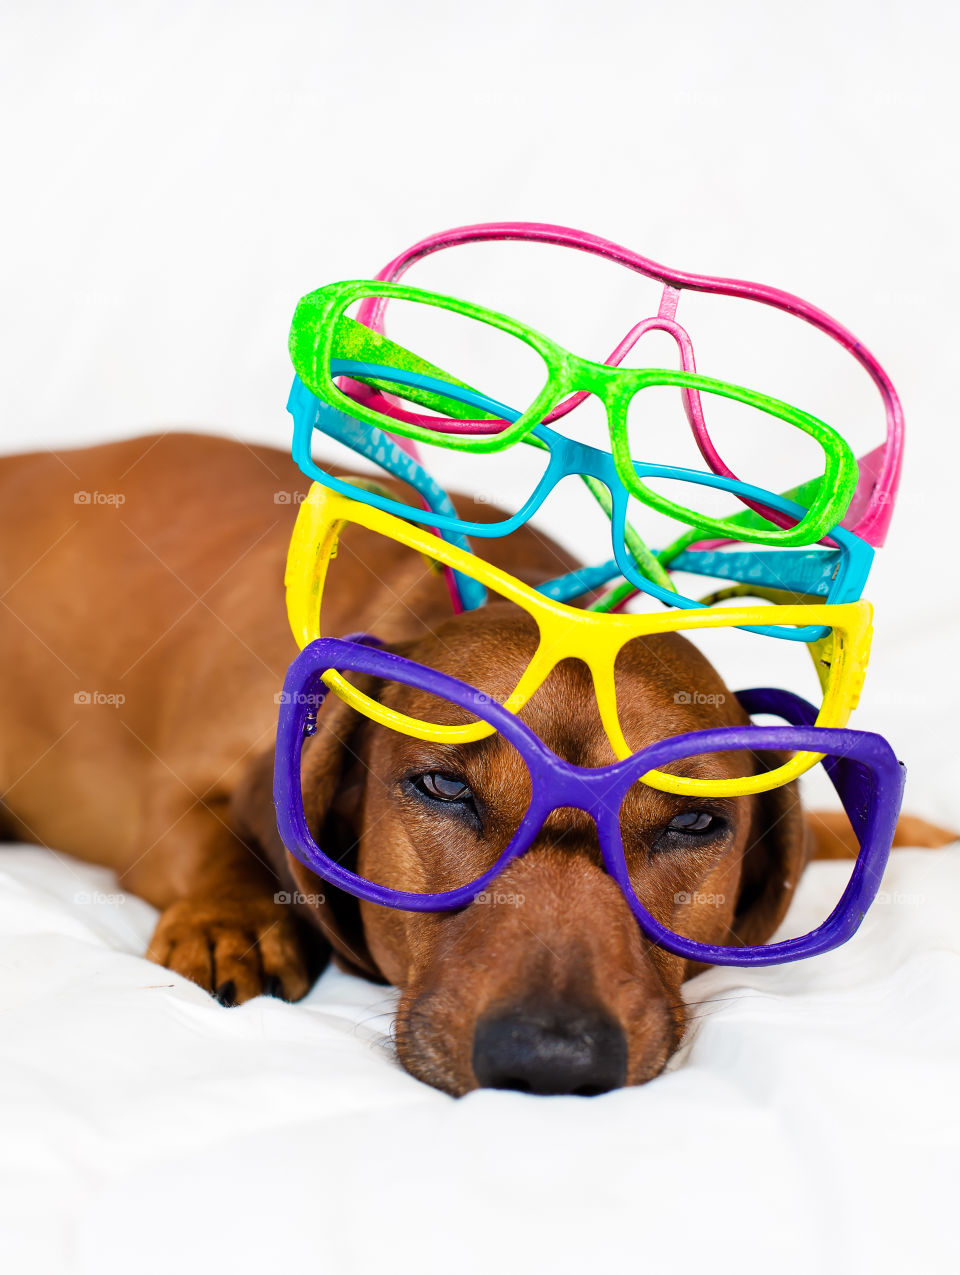 Dog and colorful eyewears